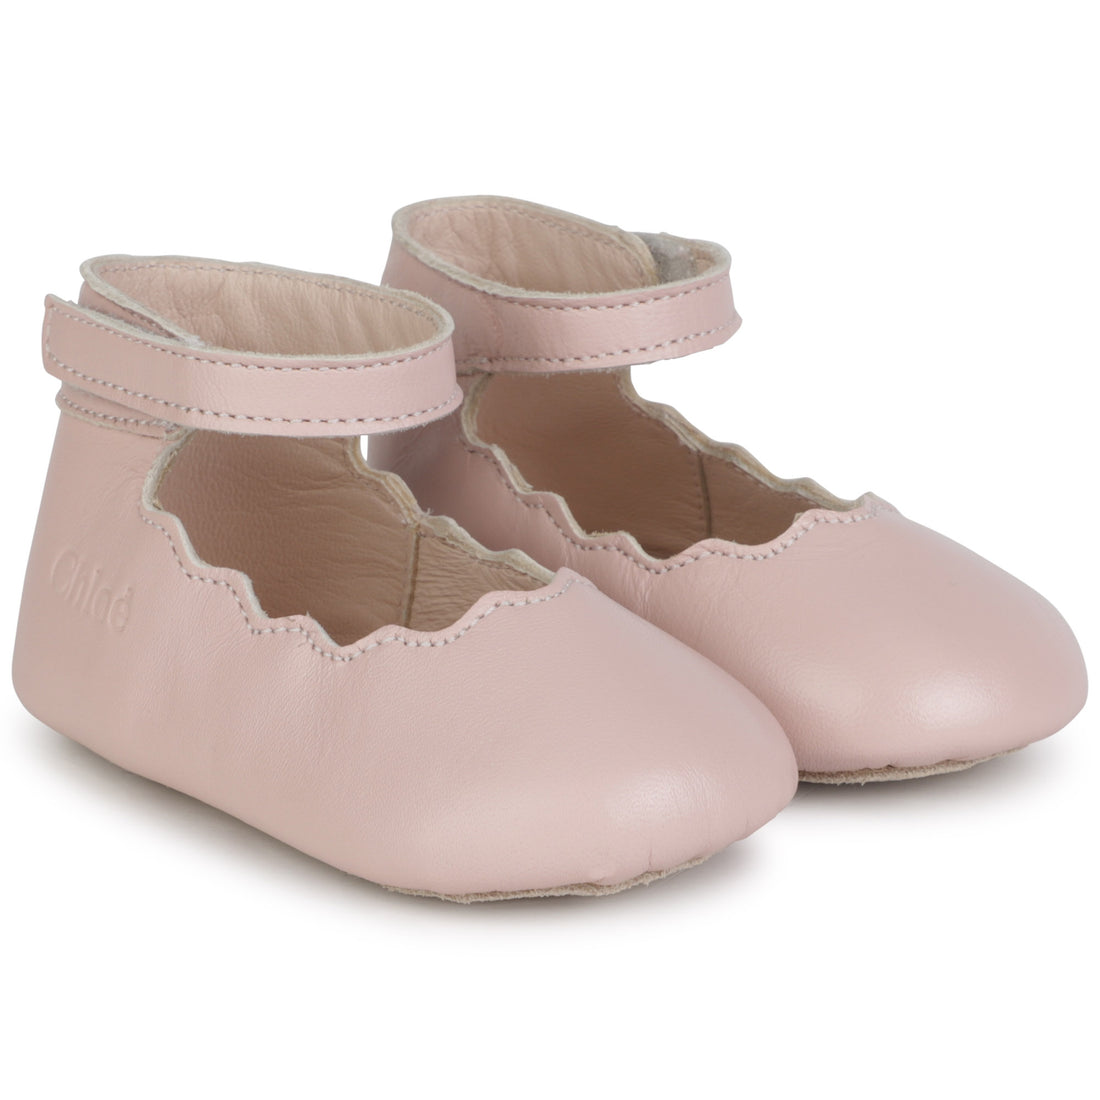 Chloe Ballerina Shoes Style: C99145